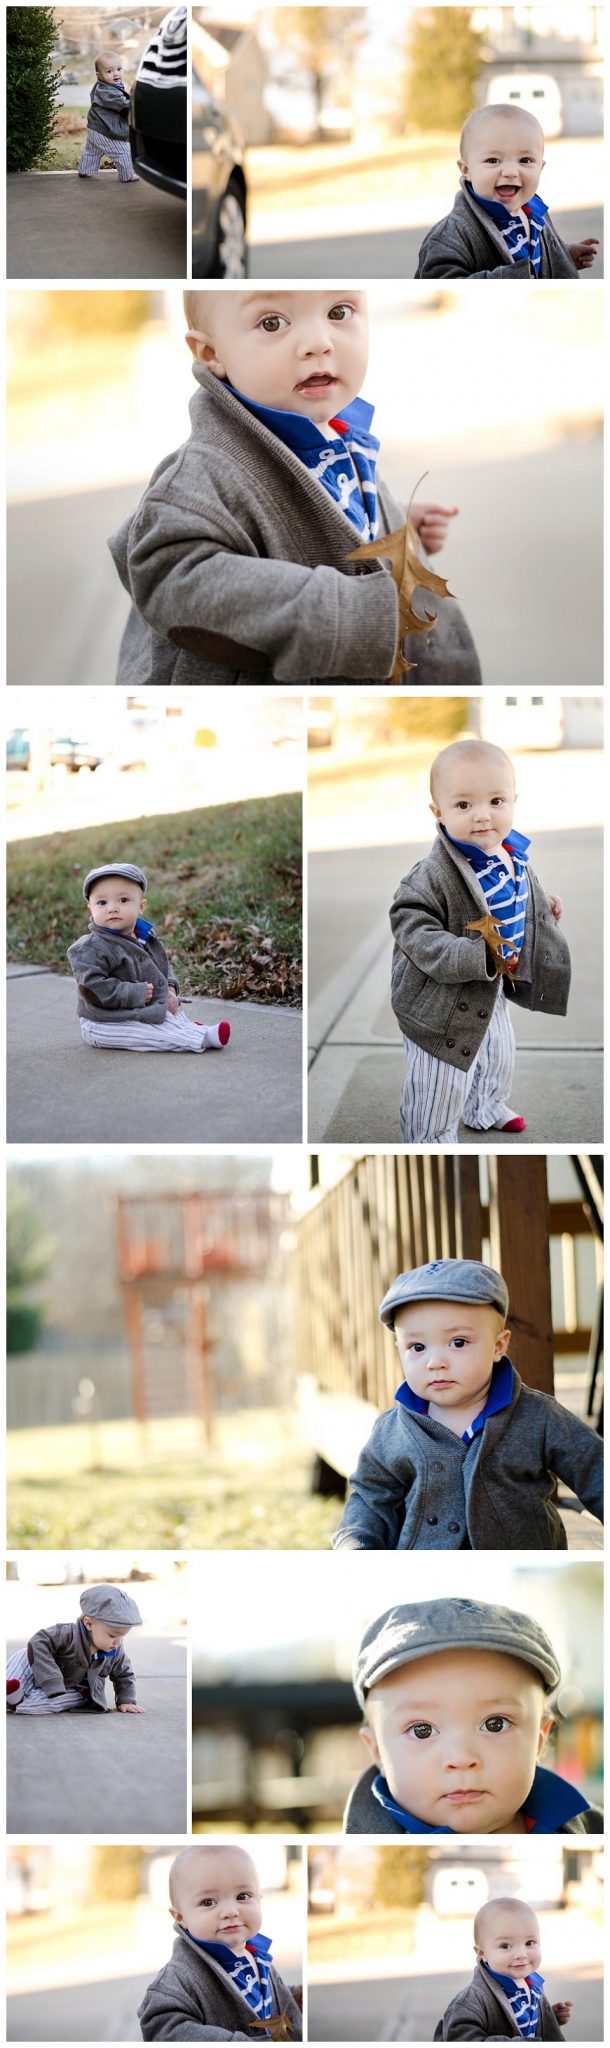 Finn 9 month - old man adorable